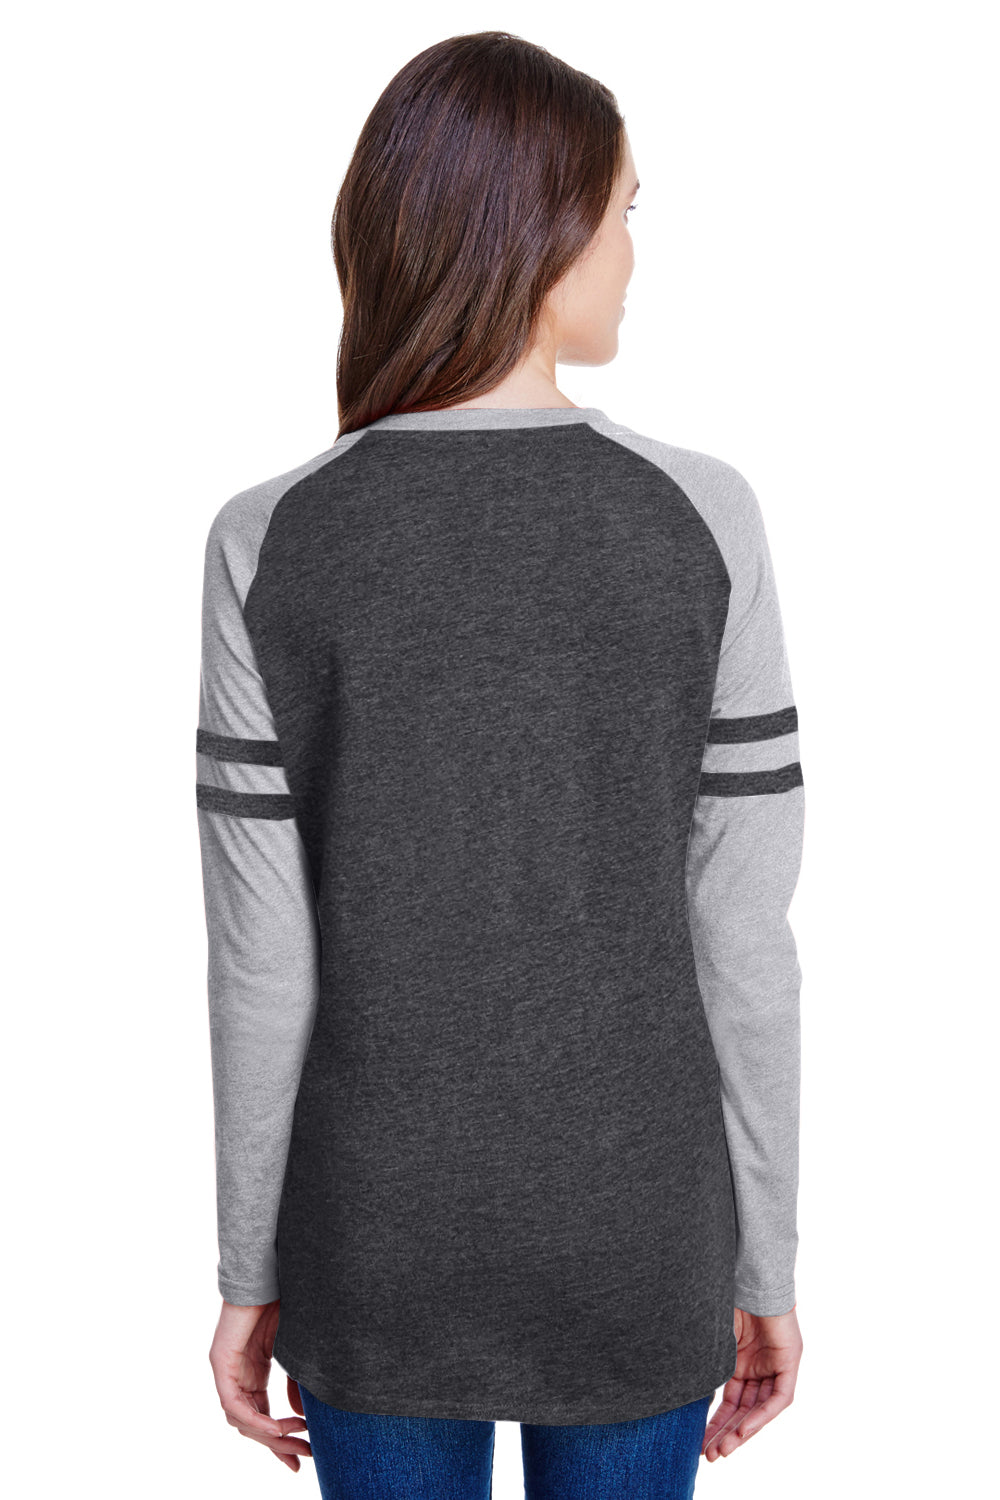 LAT 3534 Womens Gameday Mash Up Fine Jersey Long Sleeve V-Neck T-Shirt Vintage Smoke Grey/Heather Grey Back